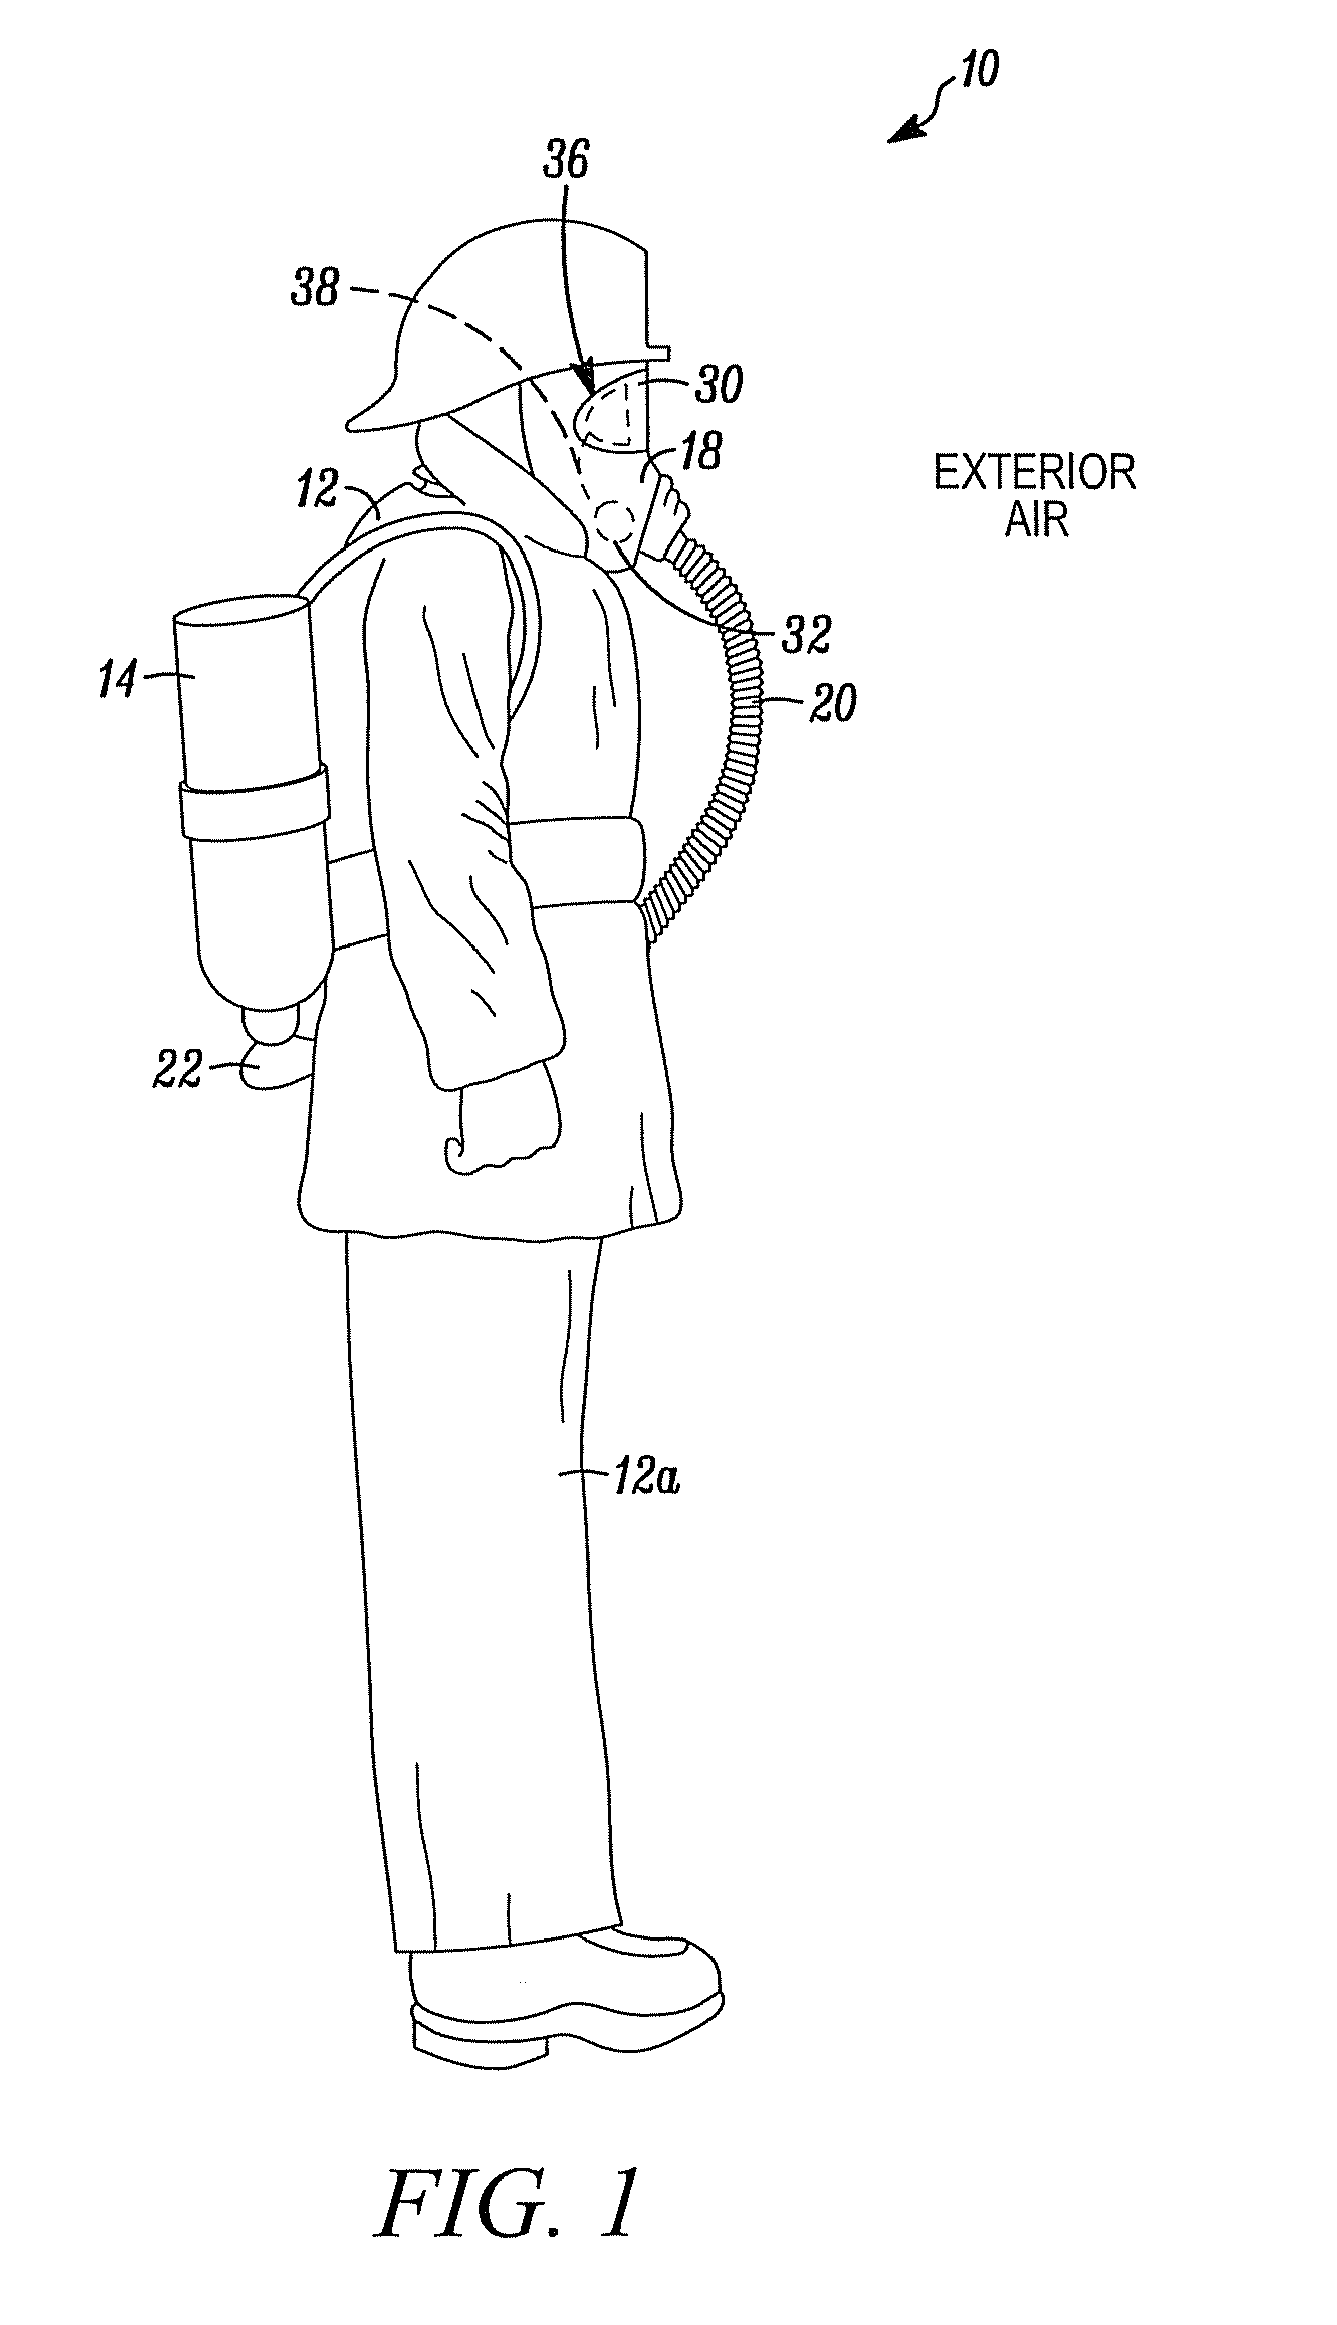 Breathing apparatus with sensor